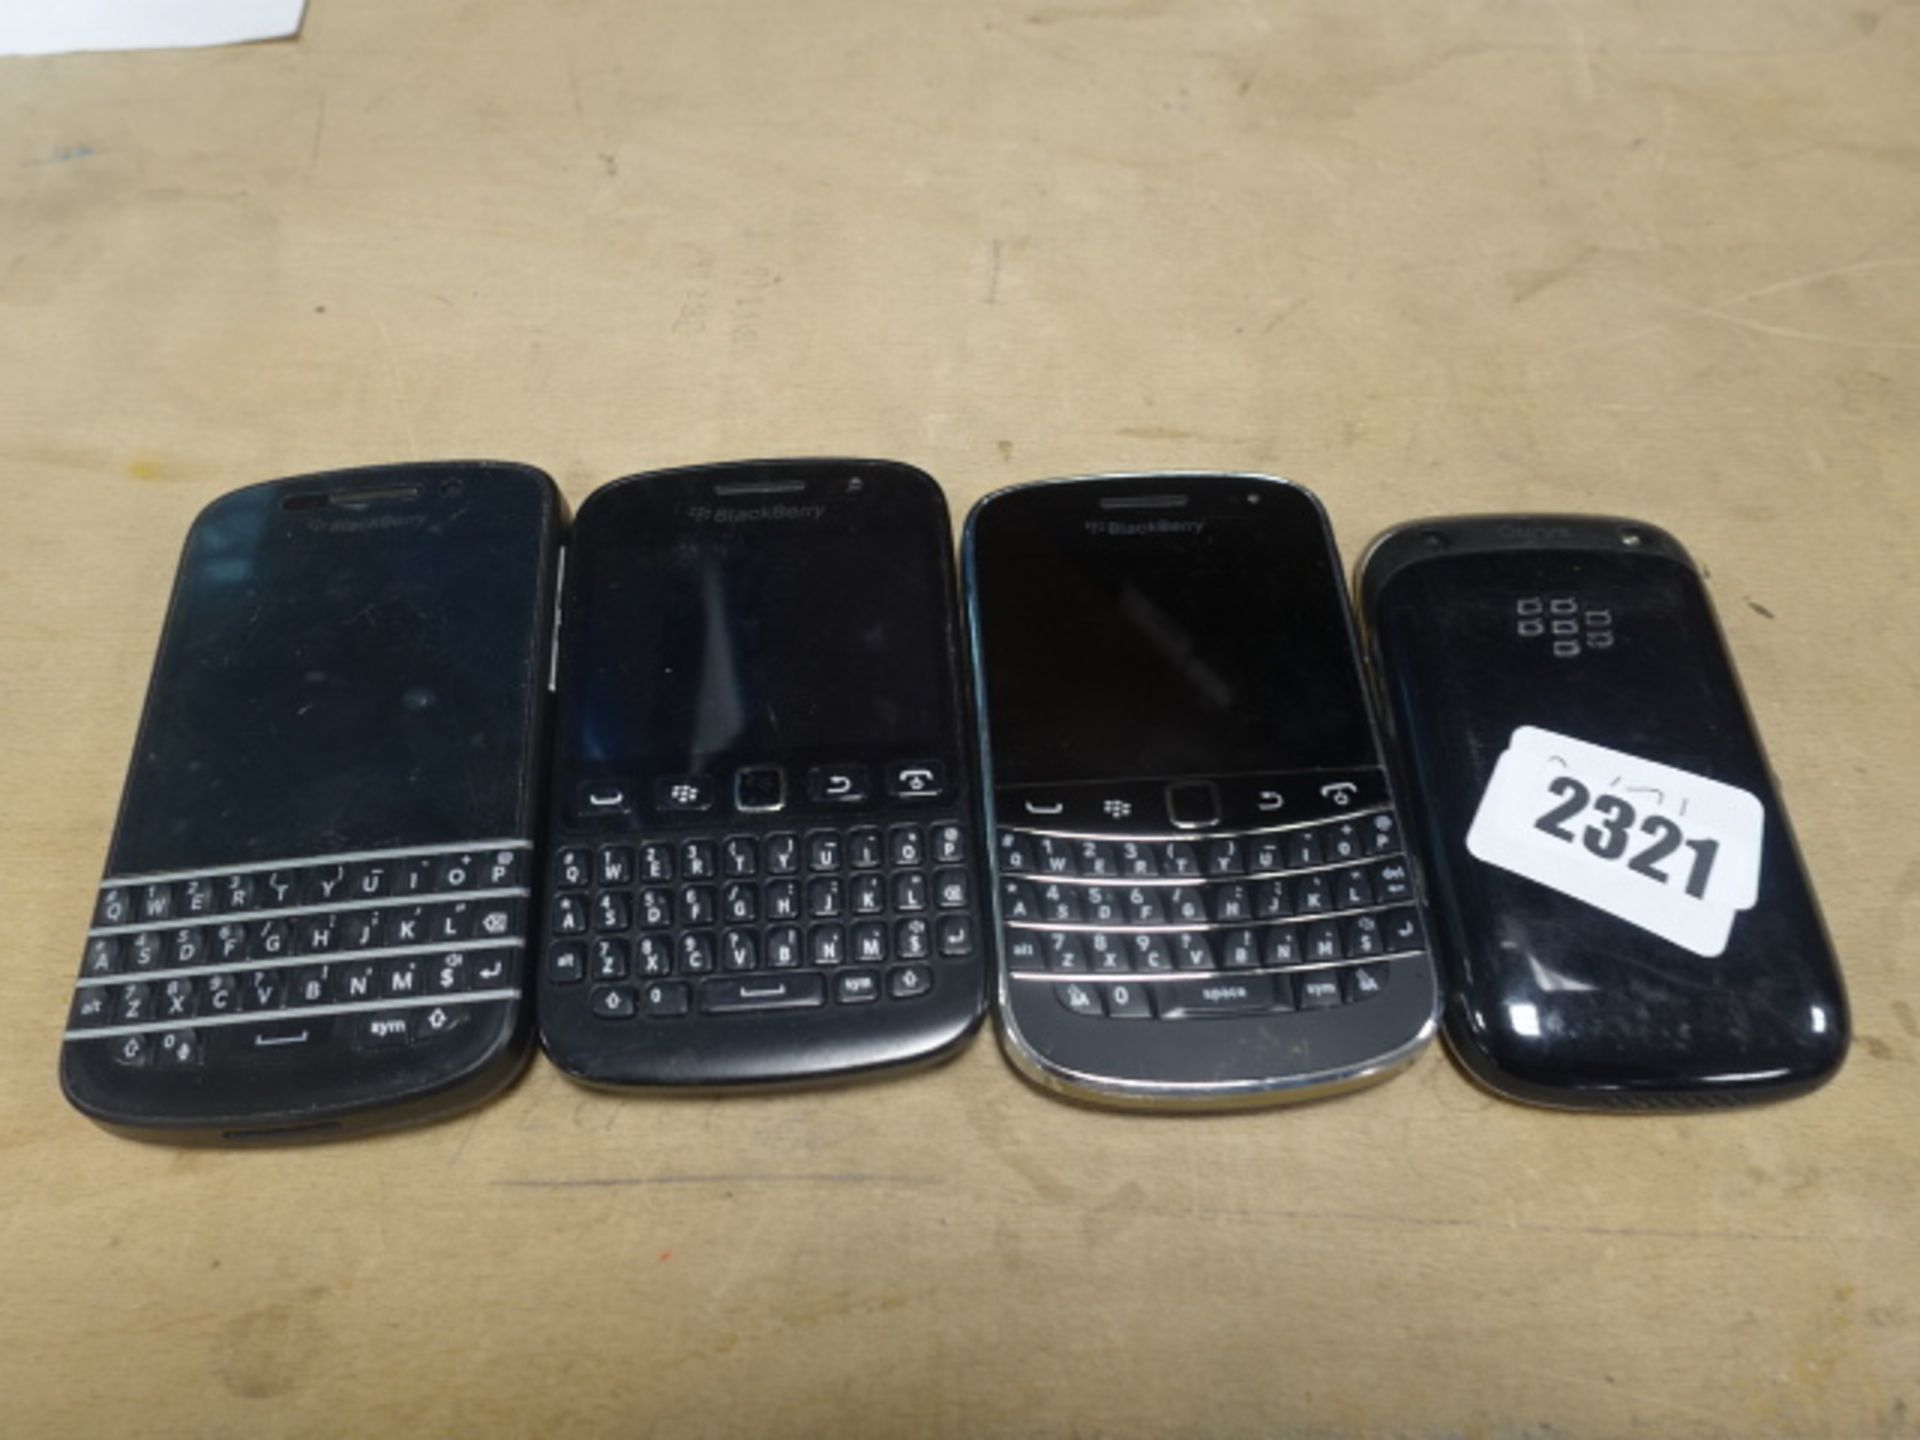 2321 Blackberry mobile phones inc. Blackberry Curve (spares/repairs)